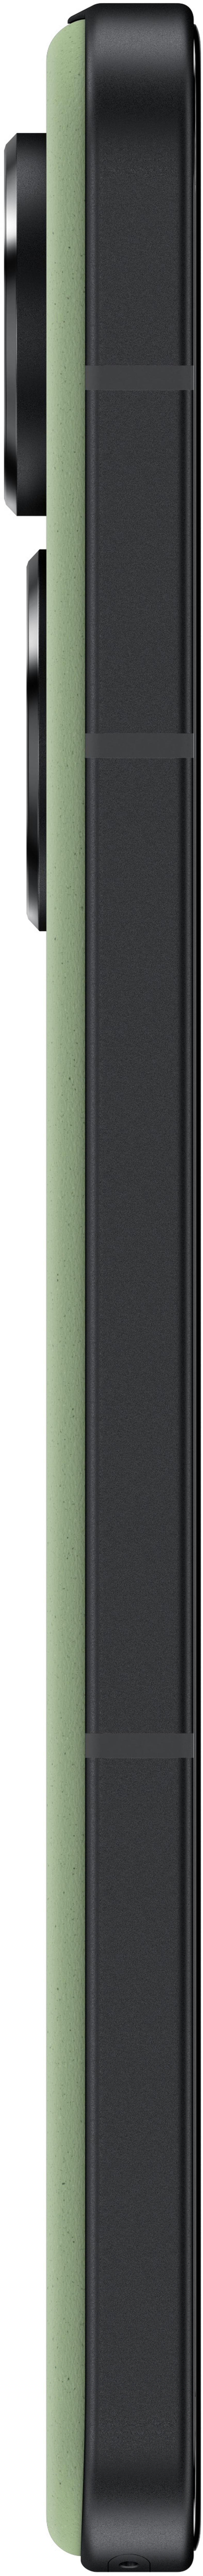 ASUS Zenfone 10 256GB Kaksois-SIM Vihreä